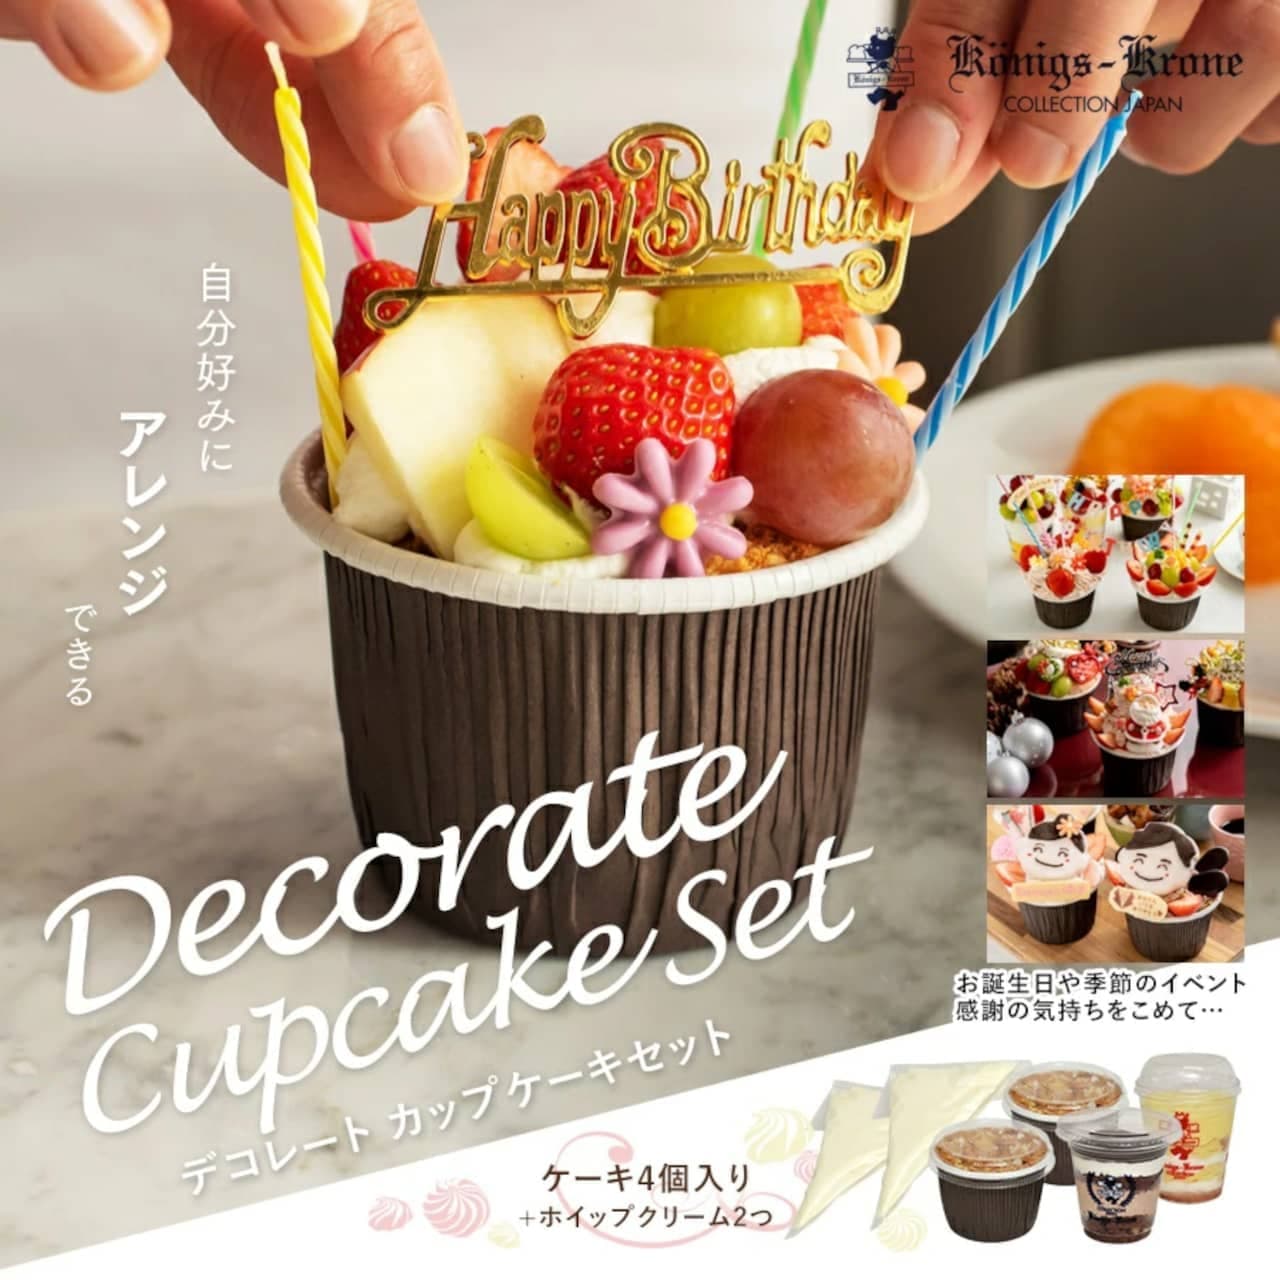 Konigs-Krone "Decorate Cupcake Set"